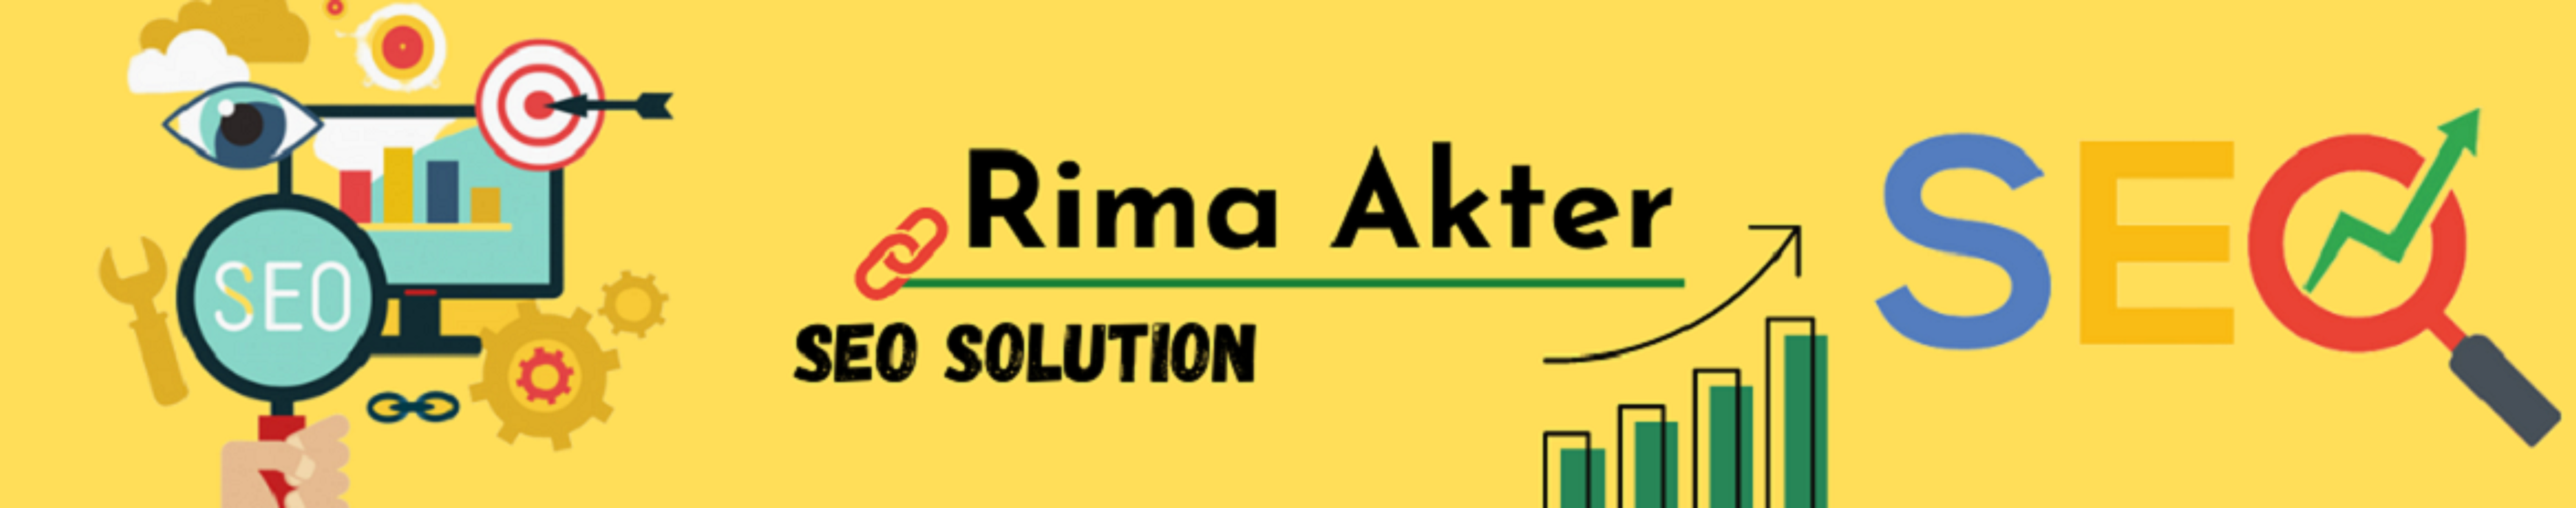 Rima Akters profilbanner